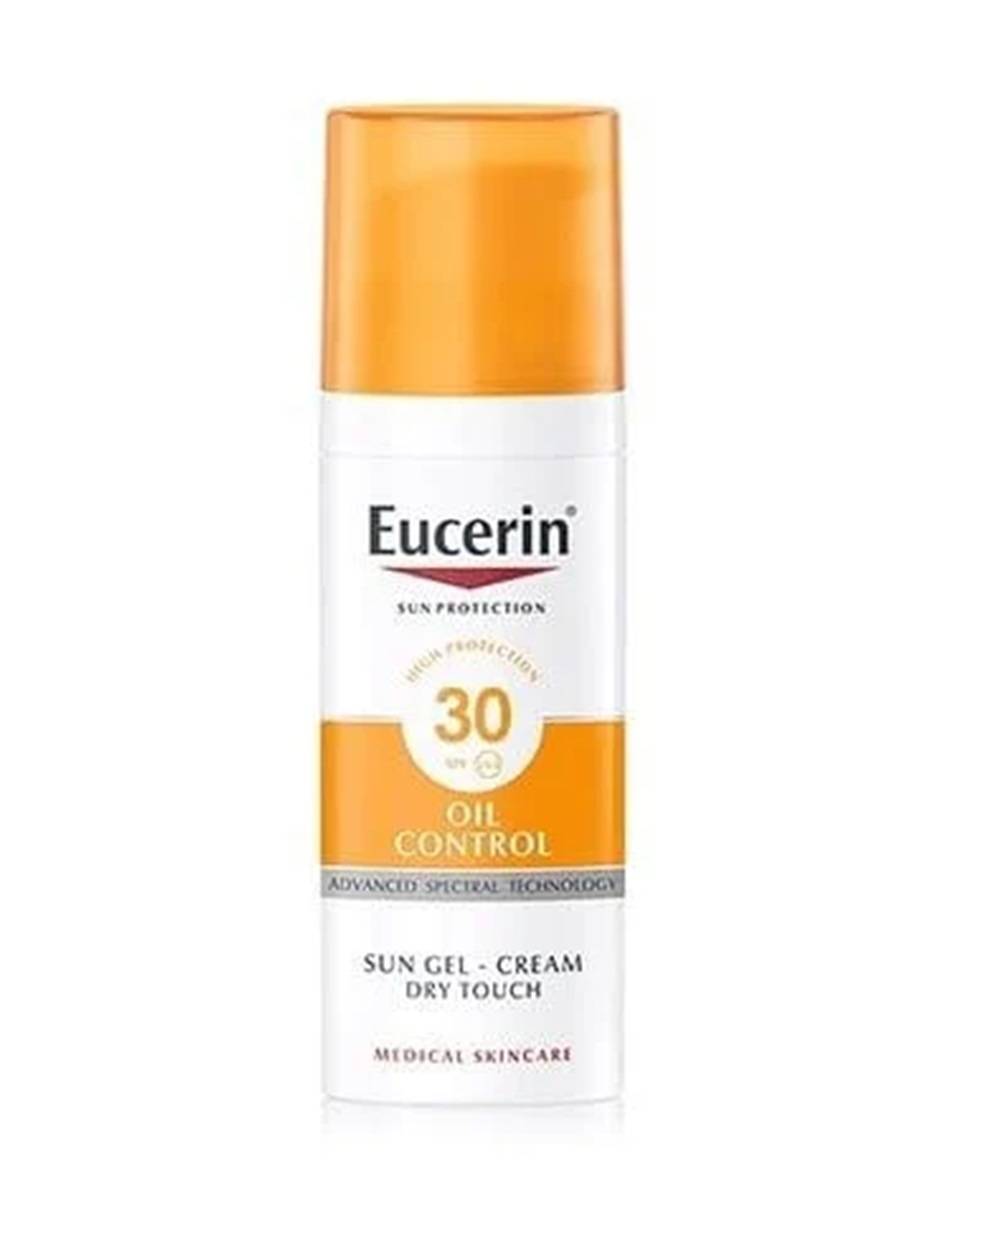 Eucerin sun Gel-crema Oil control Tacto Seco SPF 30 - 50 ml